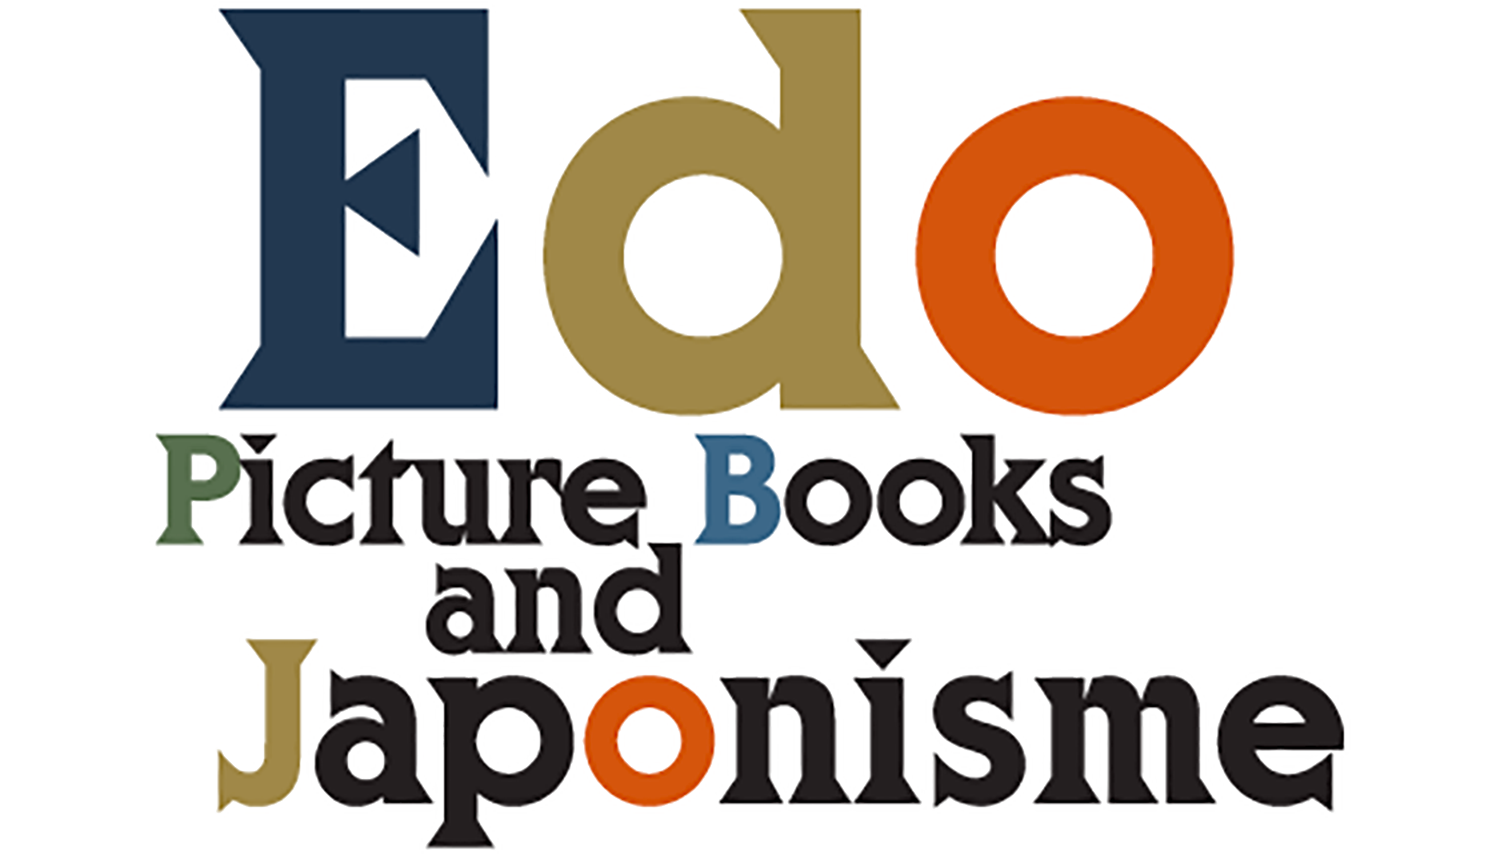 Edo Picture Books and Japonisme